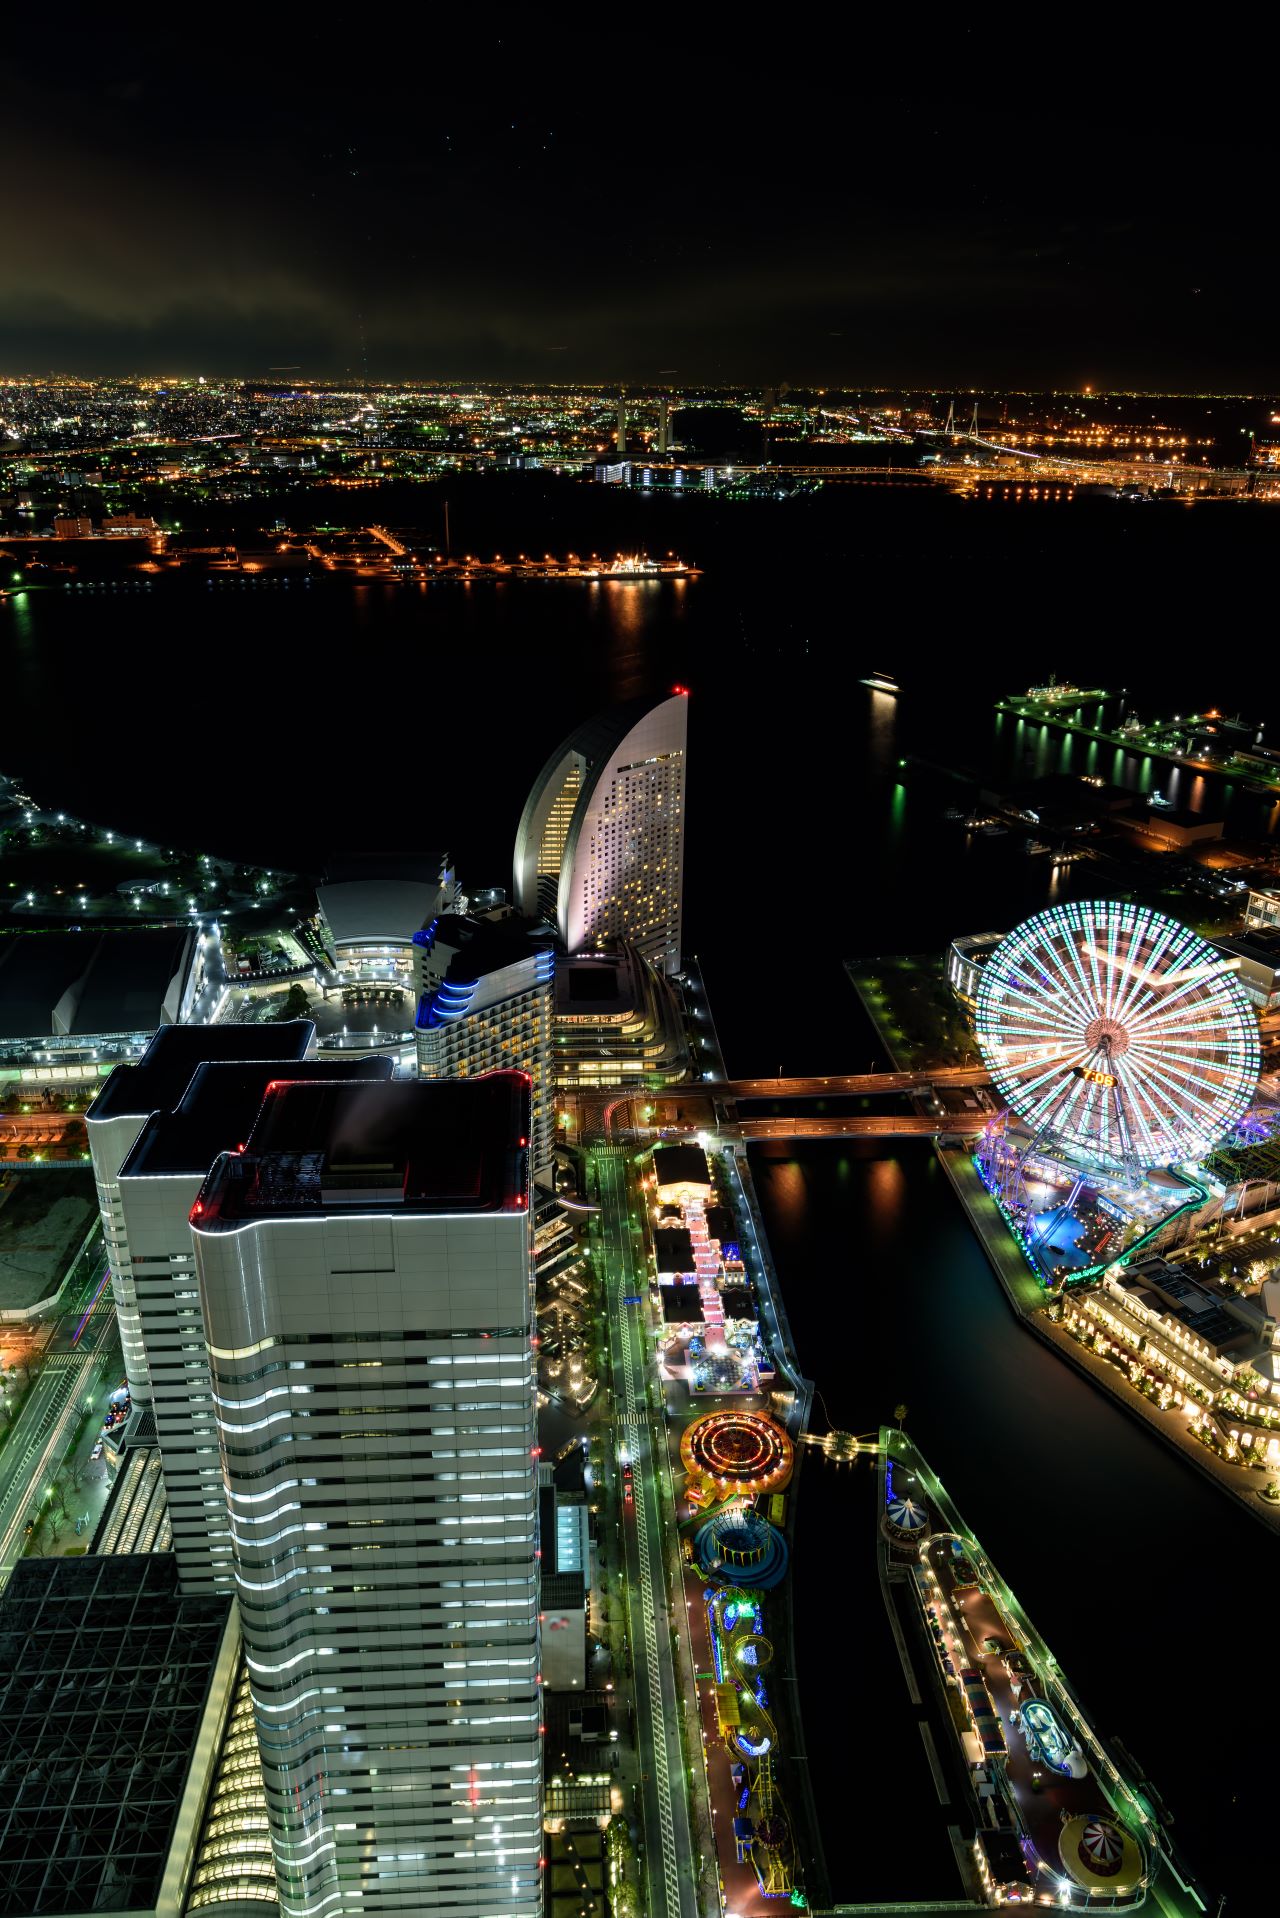 Las Vegas Sands announces it will not pursue Osaka bid, will seek Tokyo and  Yokohama